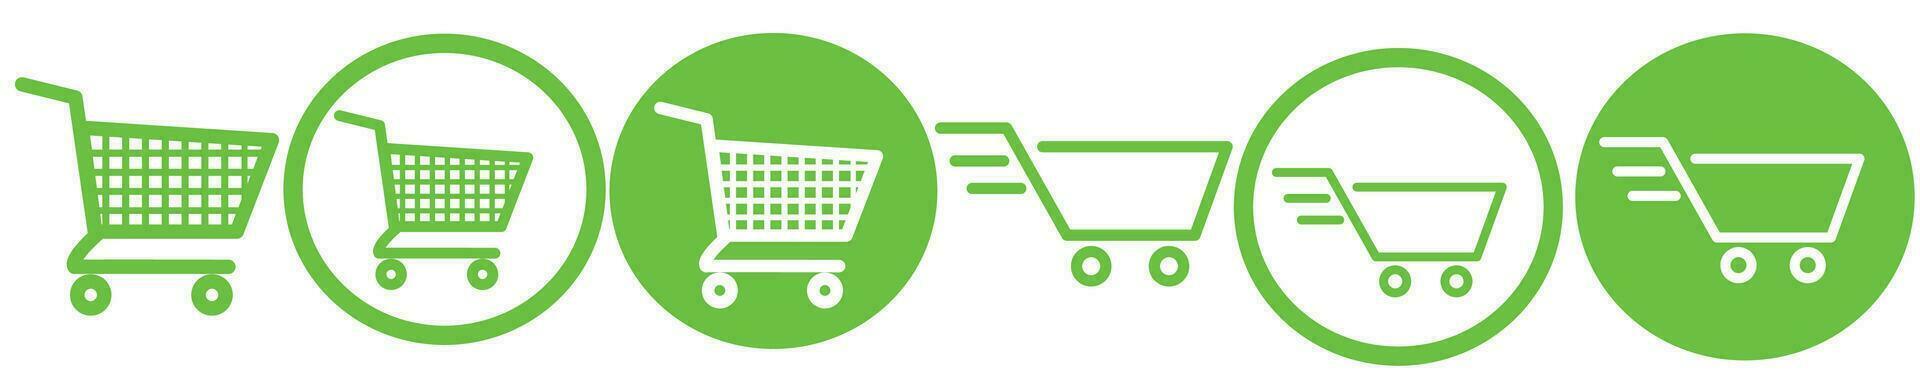 Shopping cart icon set. Shopping icons set. Shopping cart icon. Basket icon. Trolley. Vector illustration